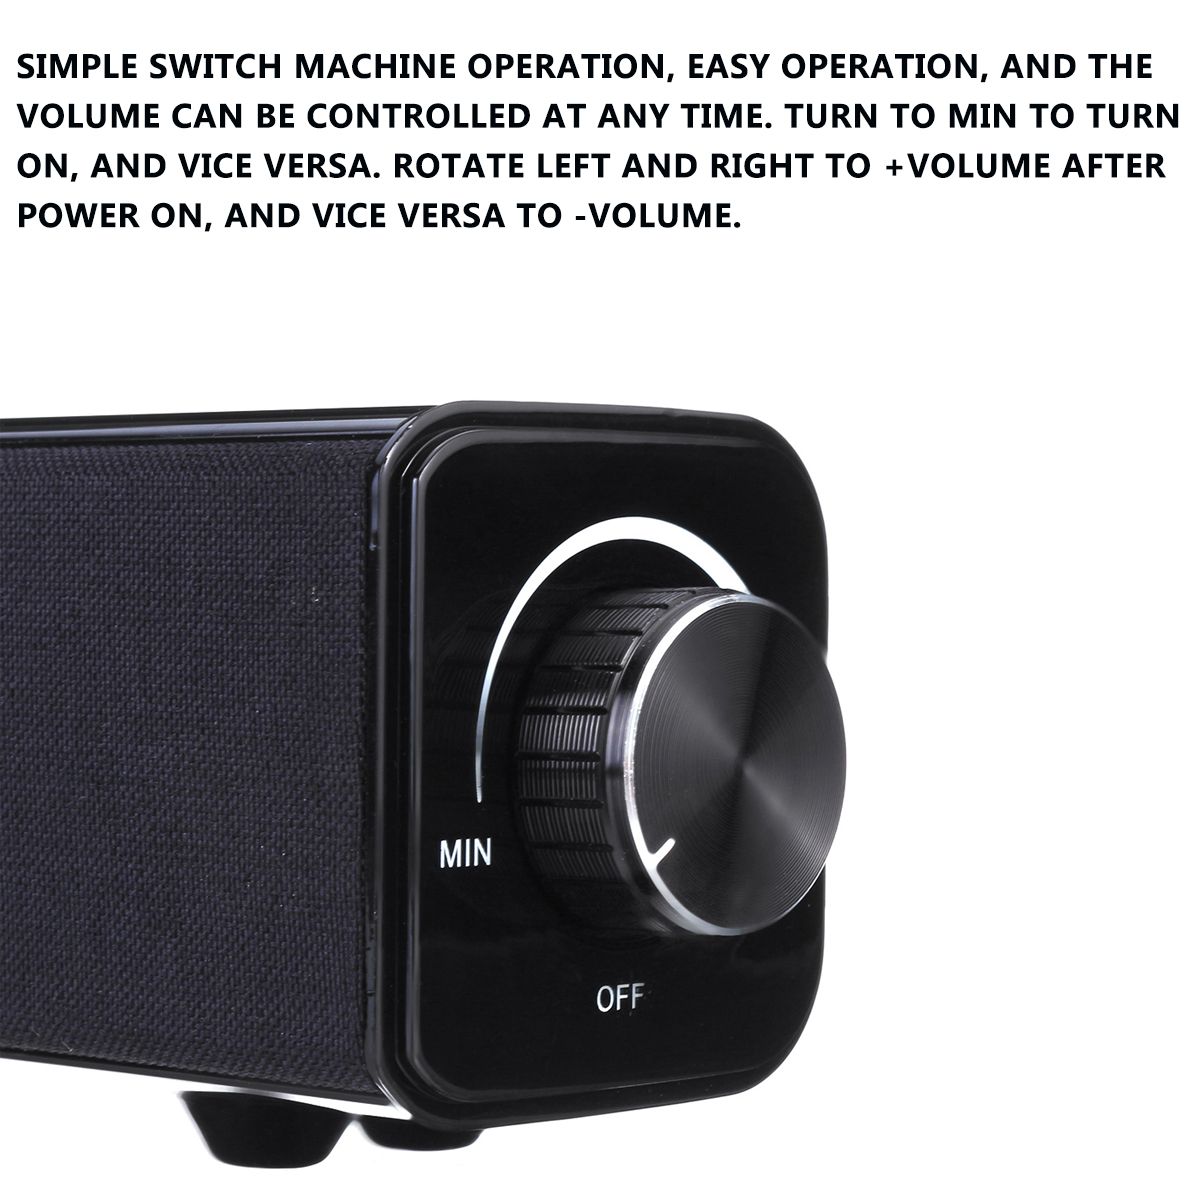 Home-TV-Soundbar-Speaker-Sound-Bar-bluetooth-Wired-and-Wireless-Theater-1730680